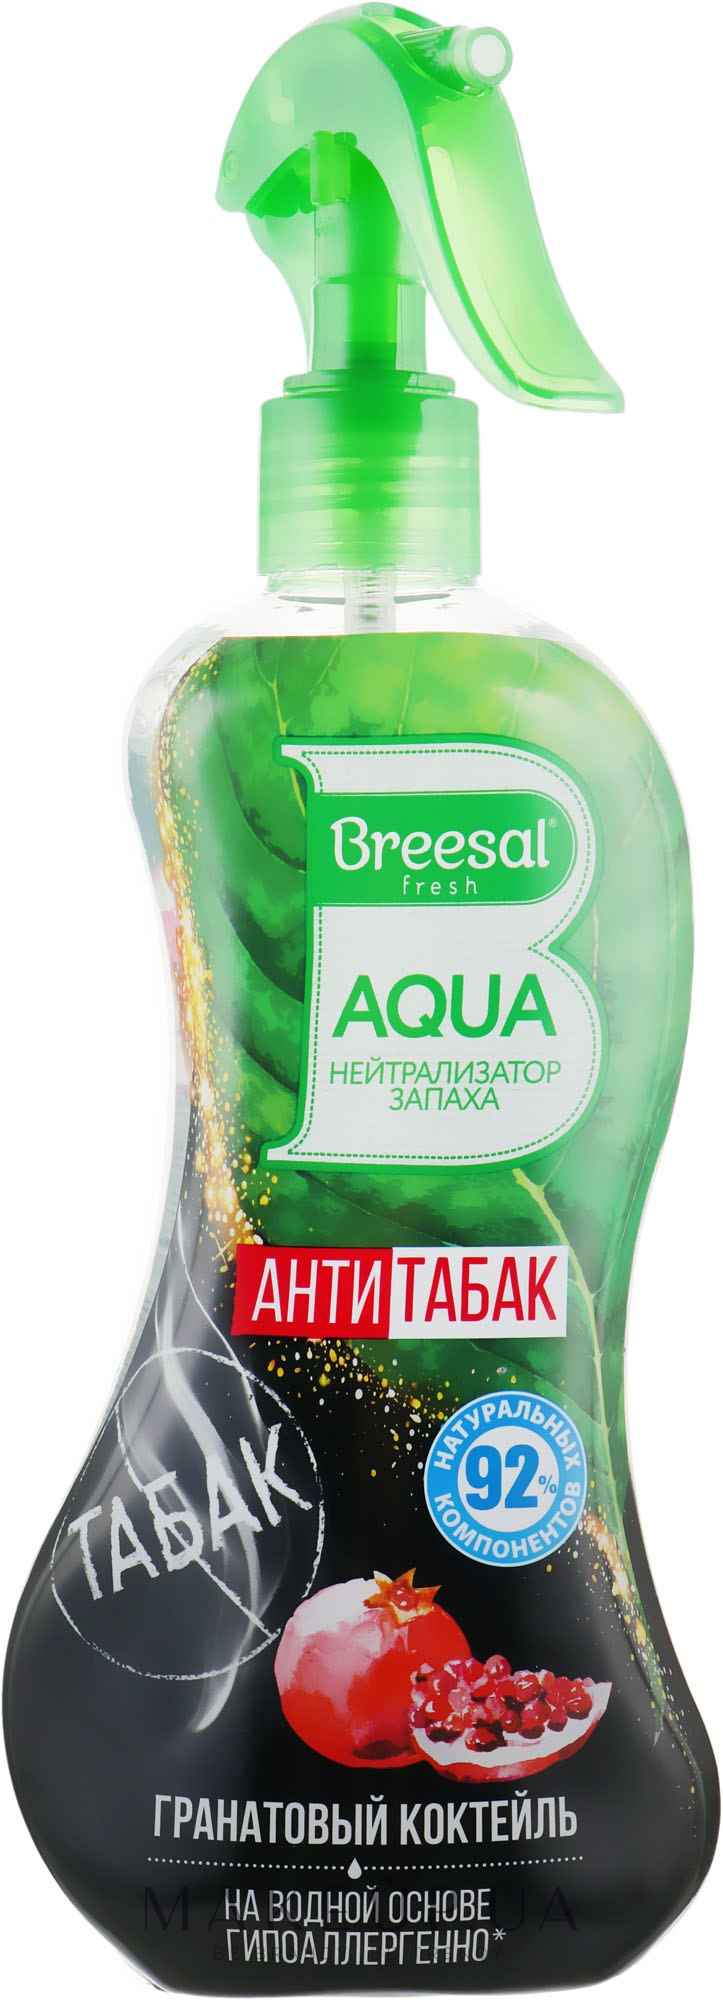 Breesal Aqua-нейтрализатор запаха антитабак Гранатовый кокт